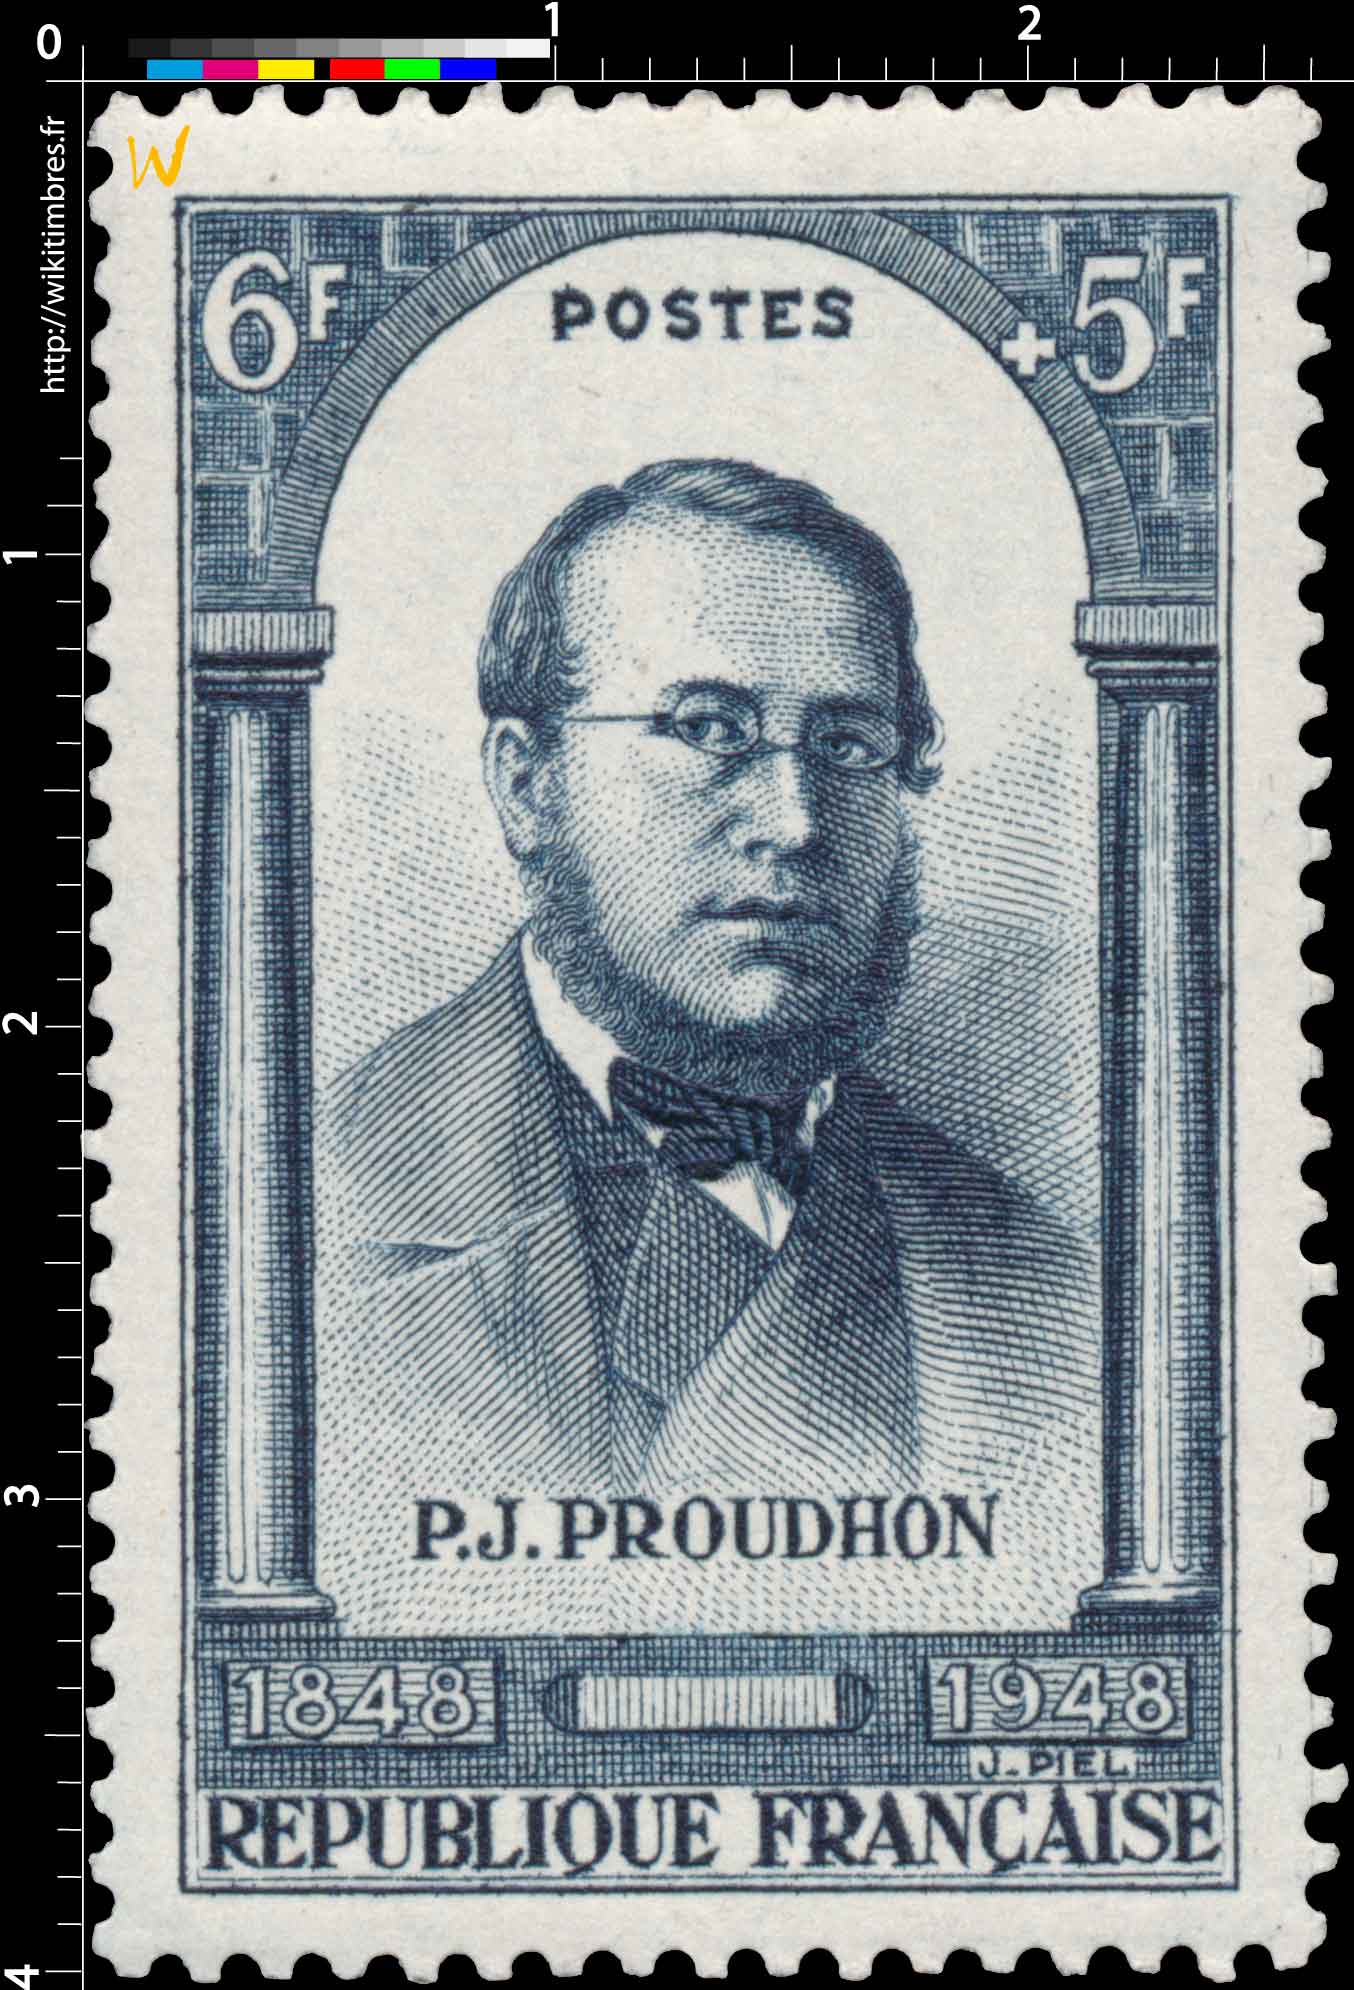 P.J. PROUDHON 1848-1948